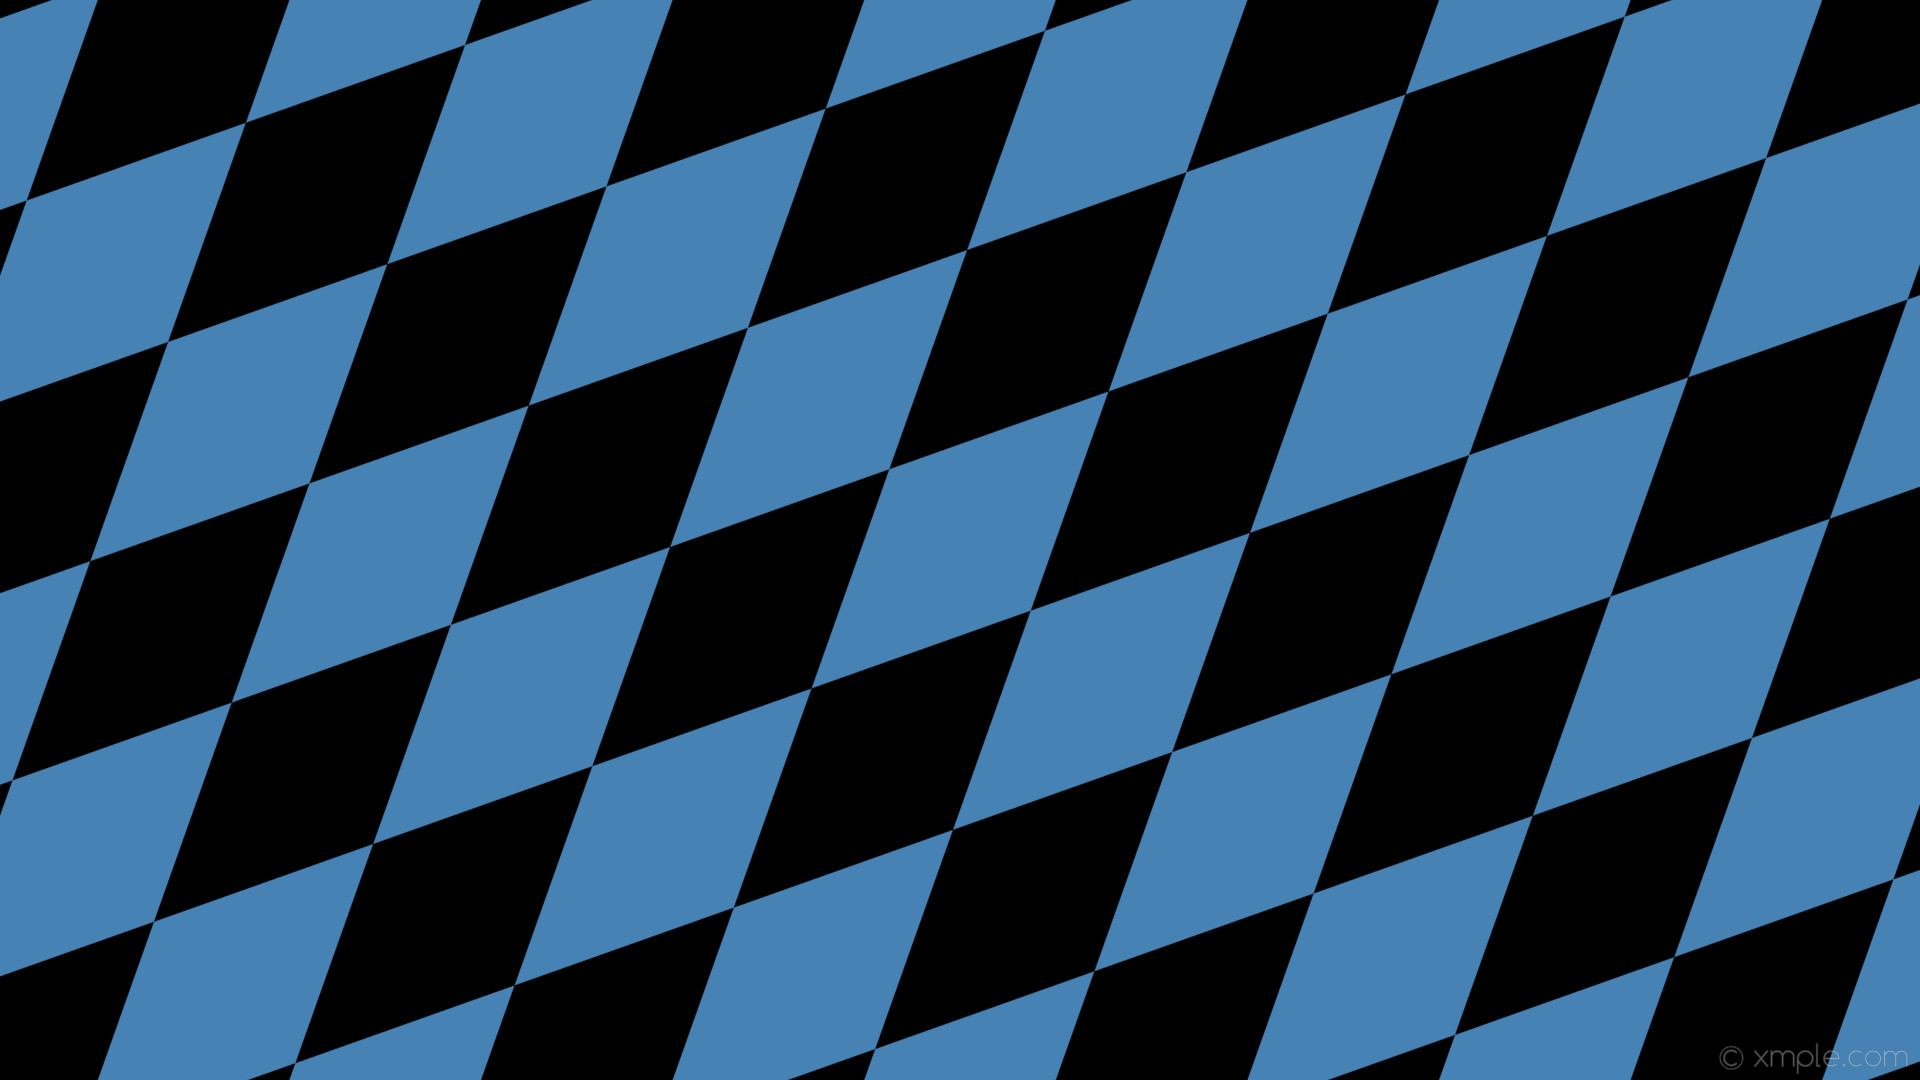 1920x1080 wallpaper lozenge blue black diamond rhombus steel blue #4682b4 #000000 45Â°  420px 200px